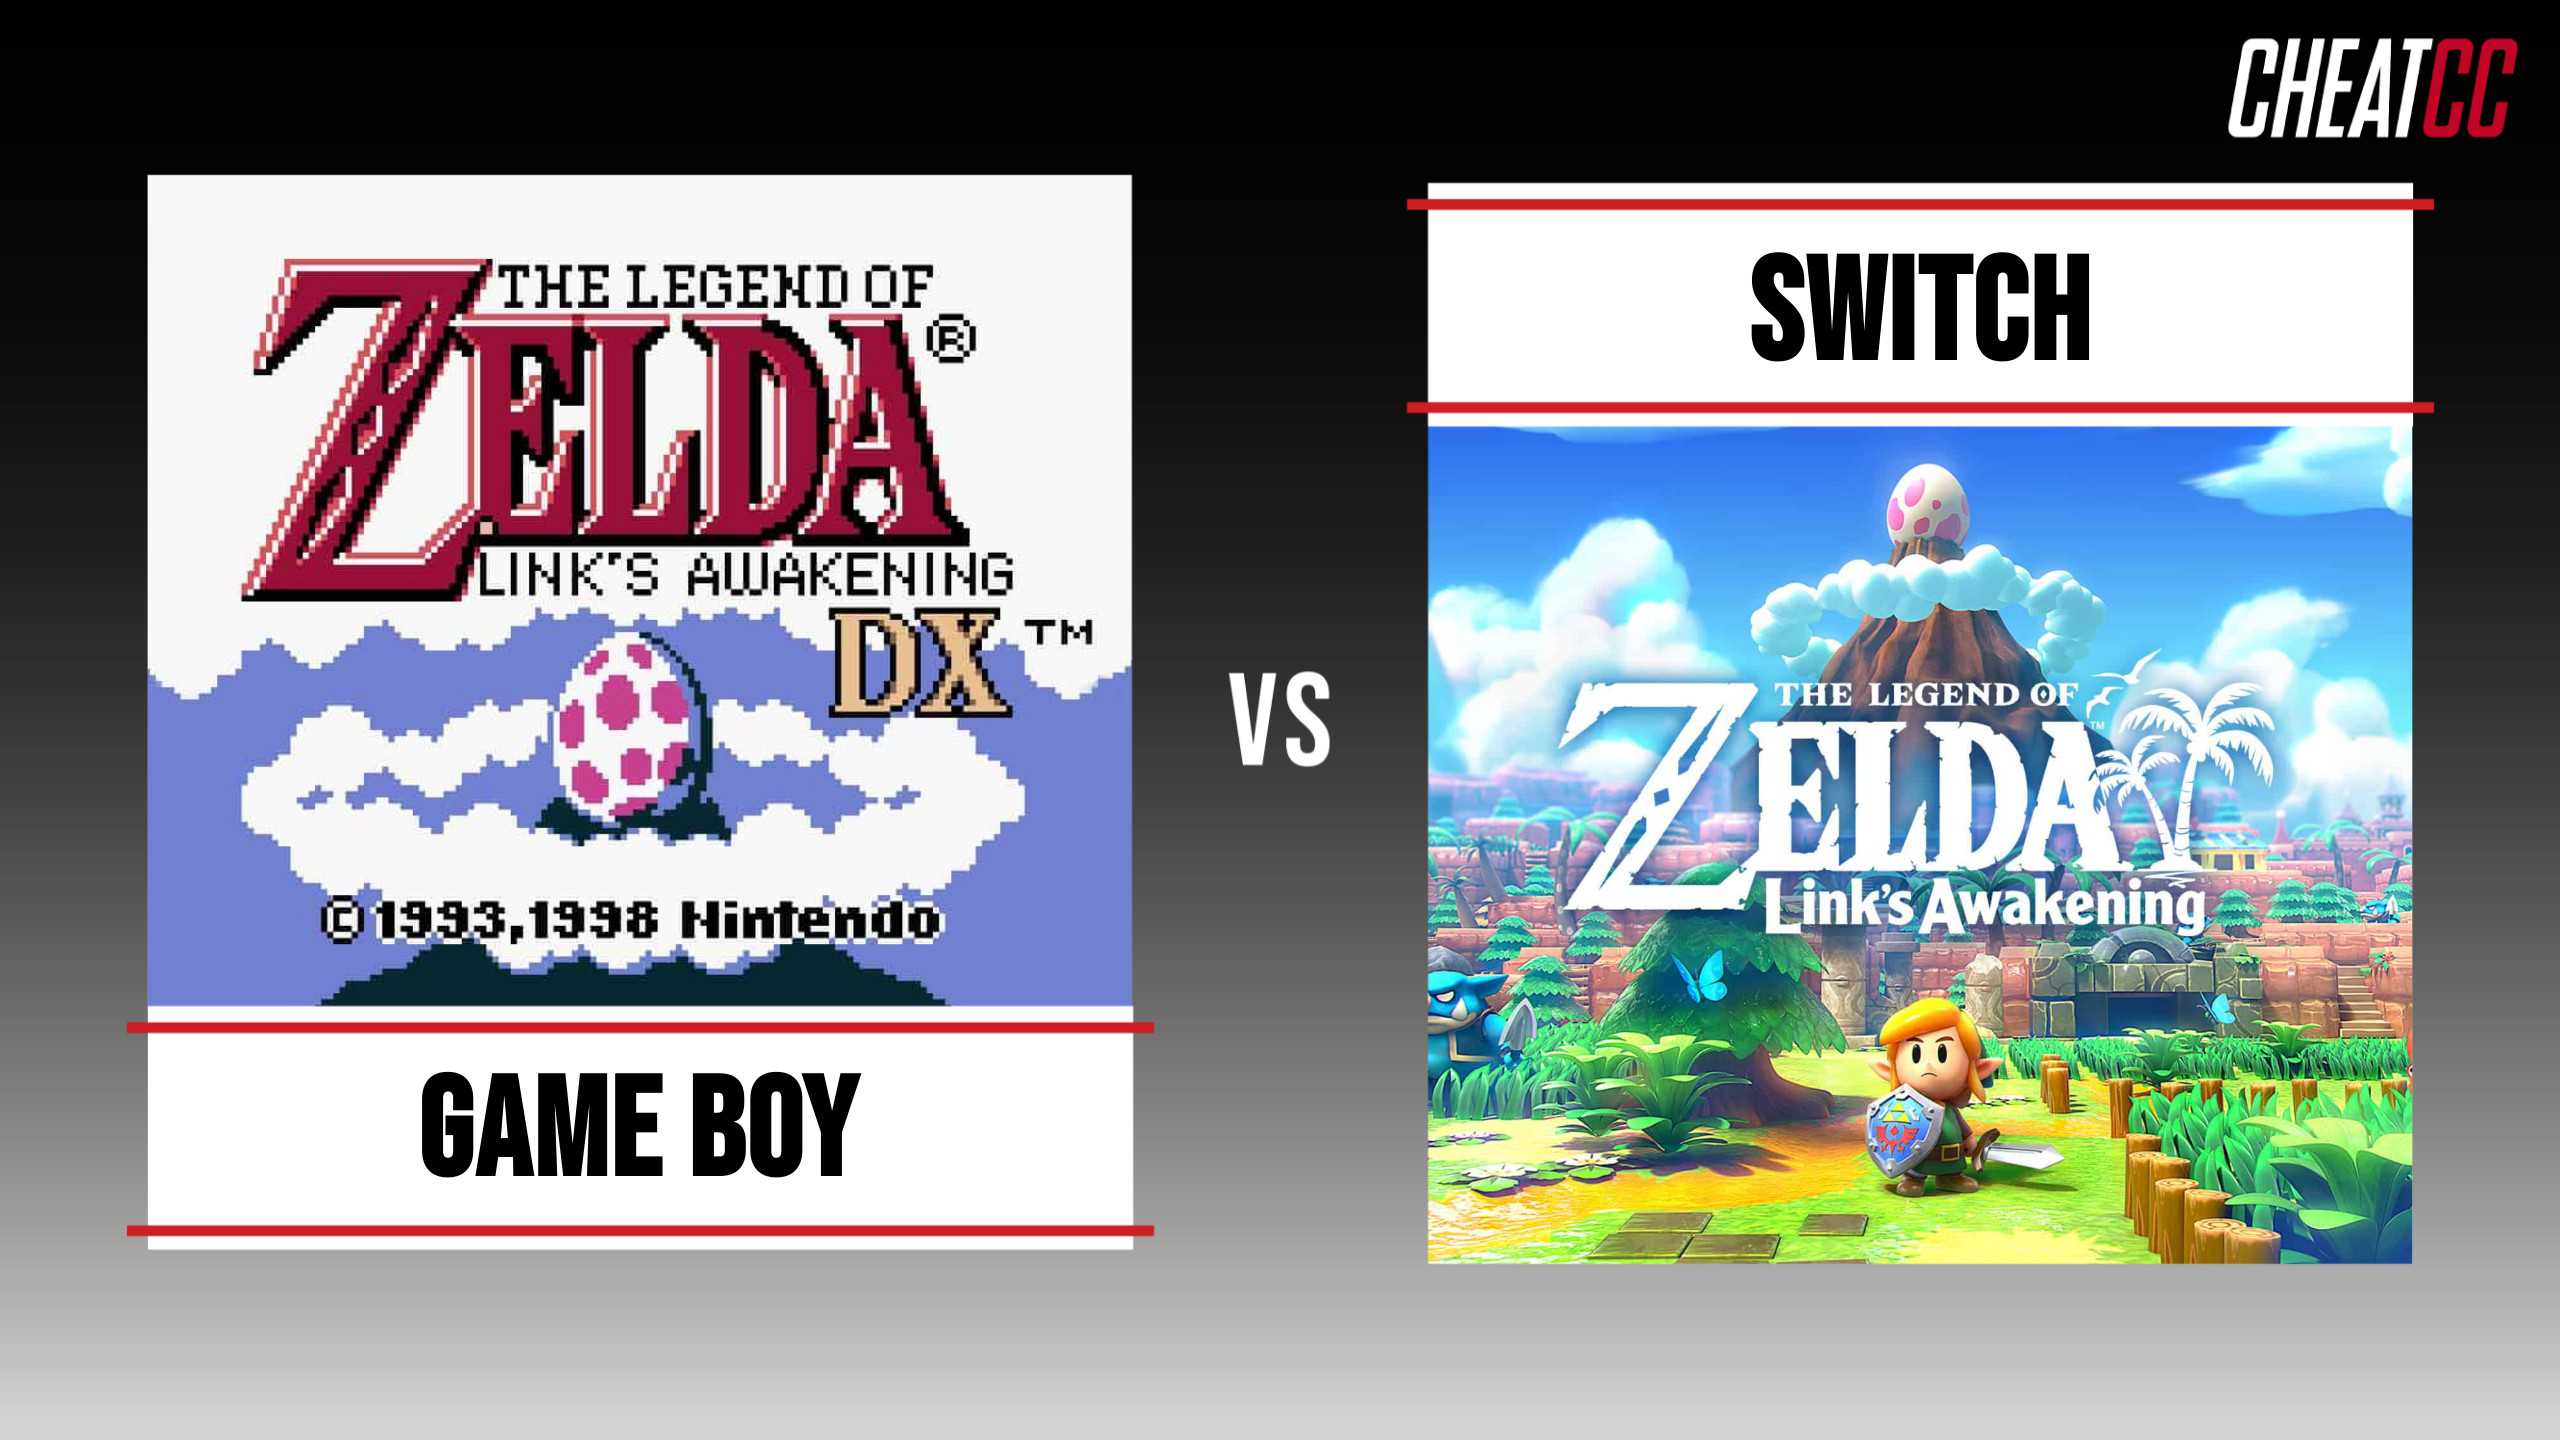 The Legend of Zelda: Link's Awakening on Game Boy vs Switch